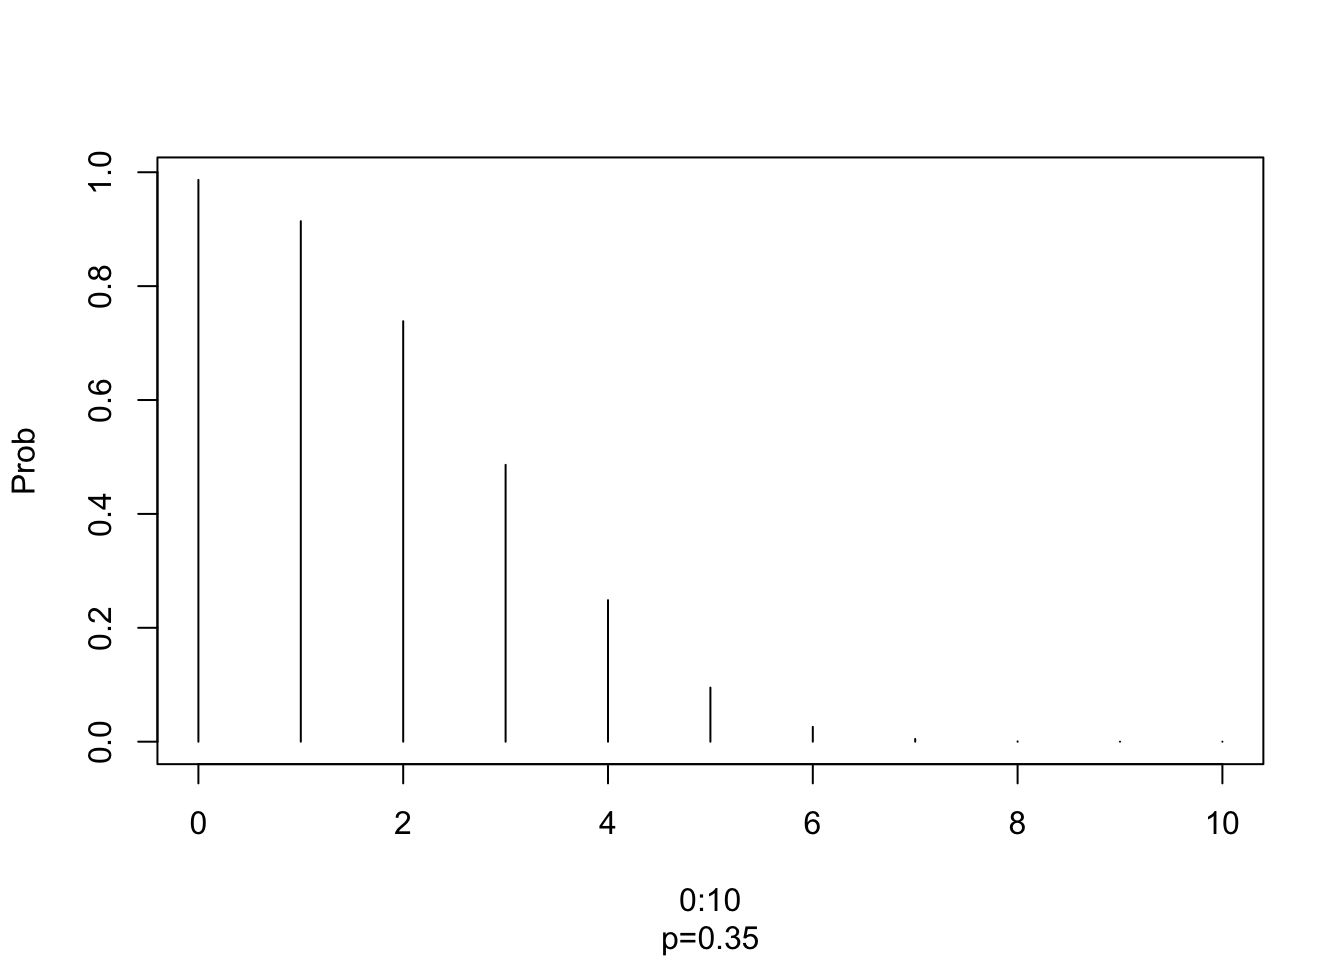 Plot de la distribucion binomial, para n = 0:10;  x = 10, p = 0.35.